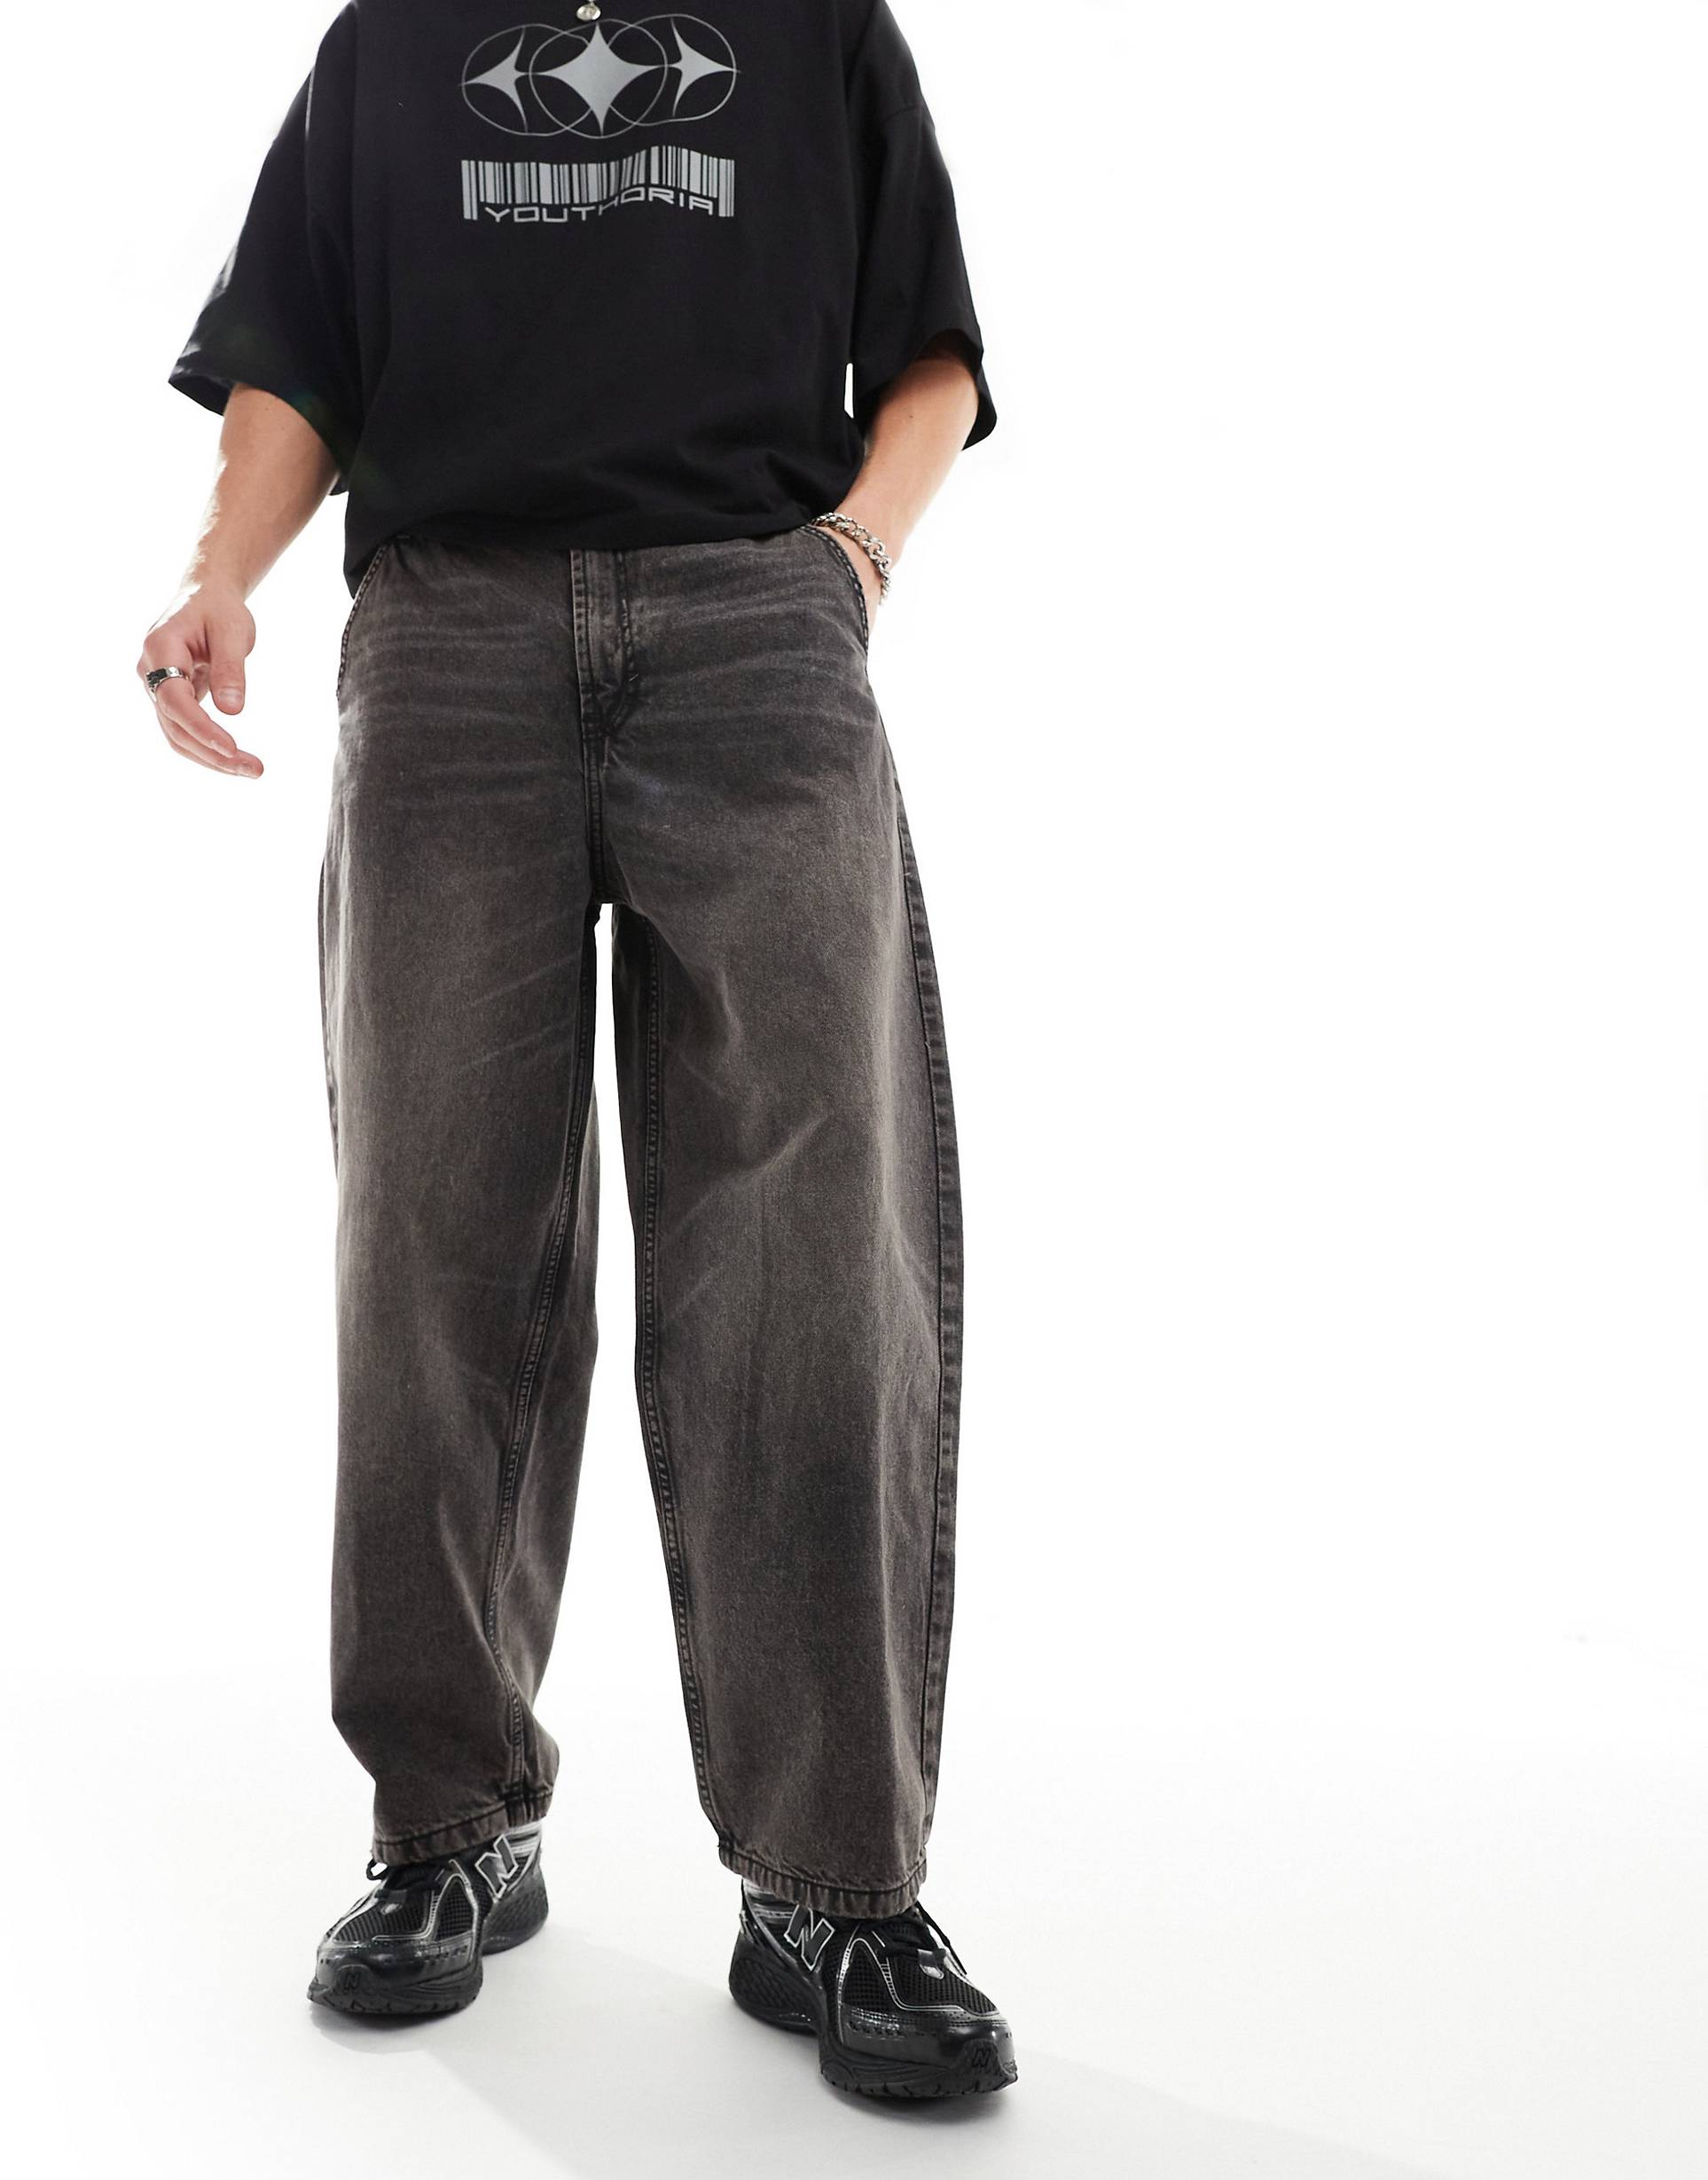 Джинсы Bershka Skater Fit Casted, коричневый джинсы bershka базовые 40 размер